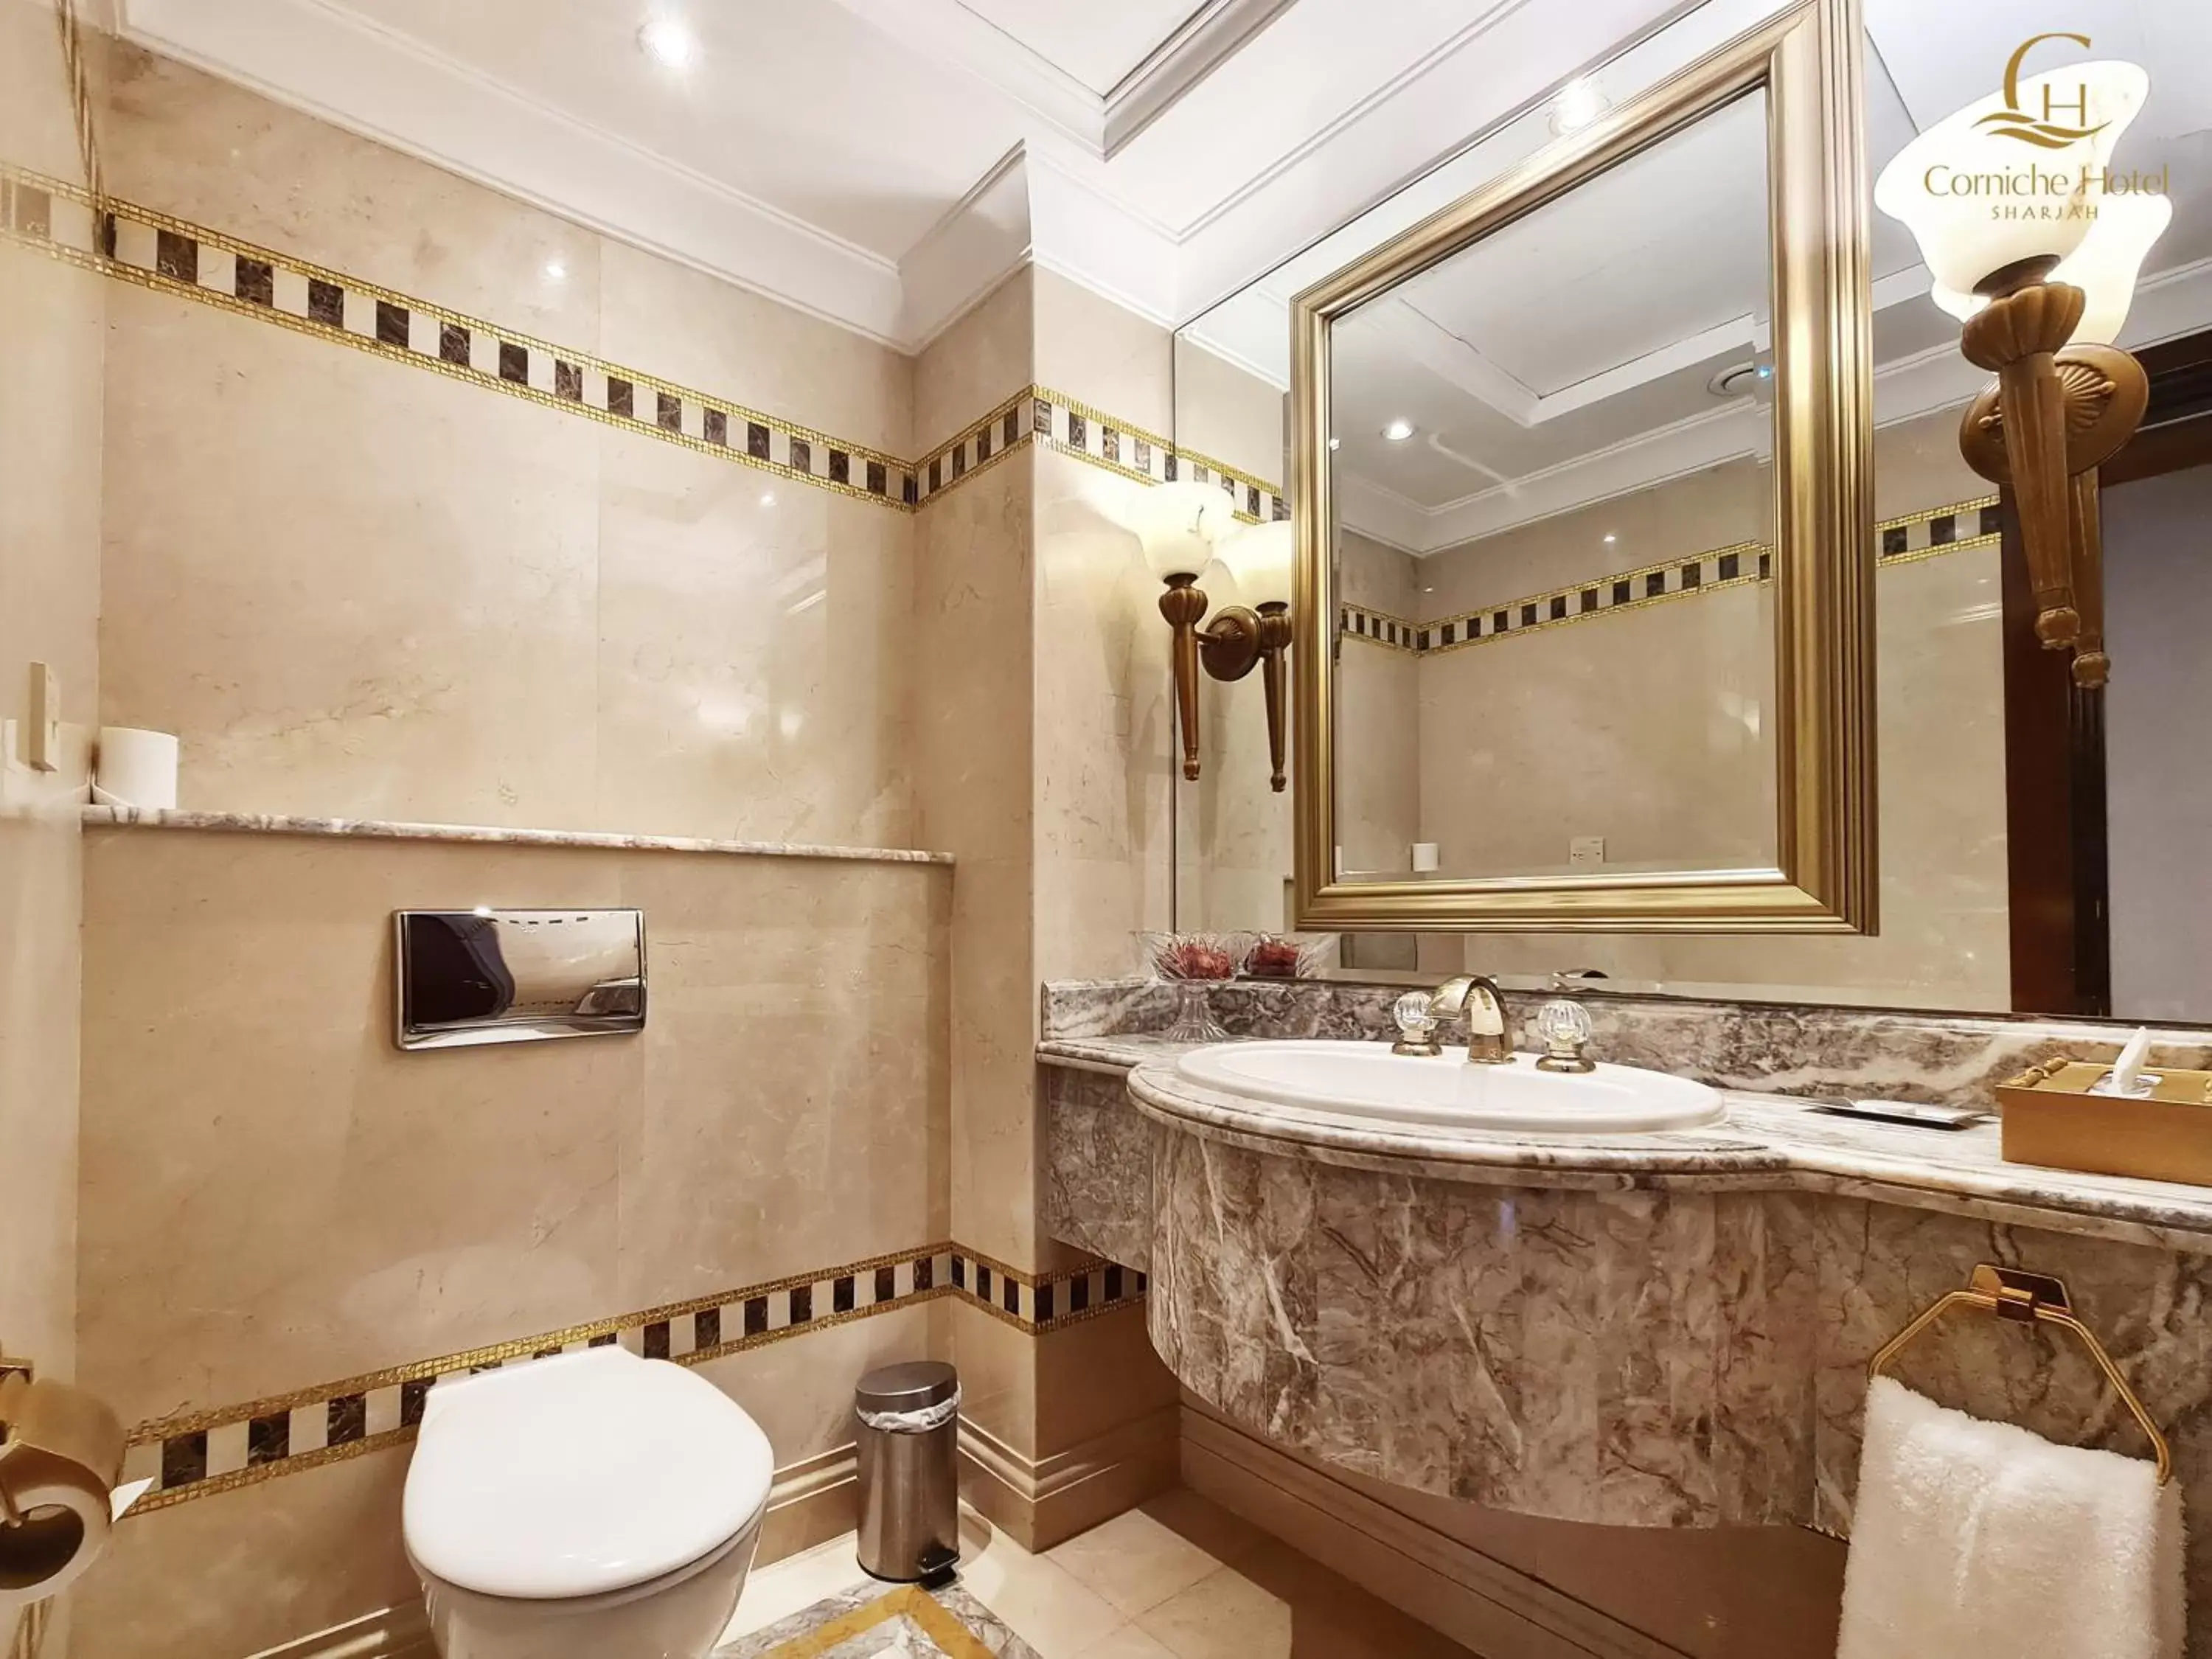 Toilet, Bathroom in Corniche Hotel Sharjah